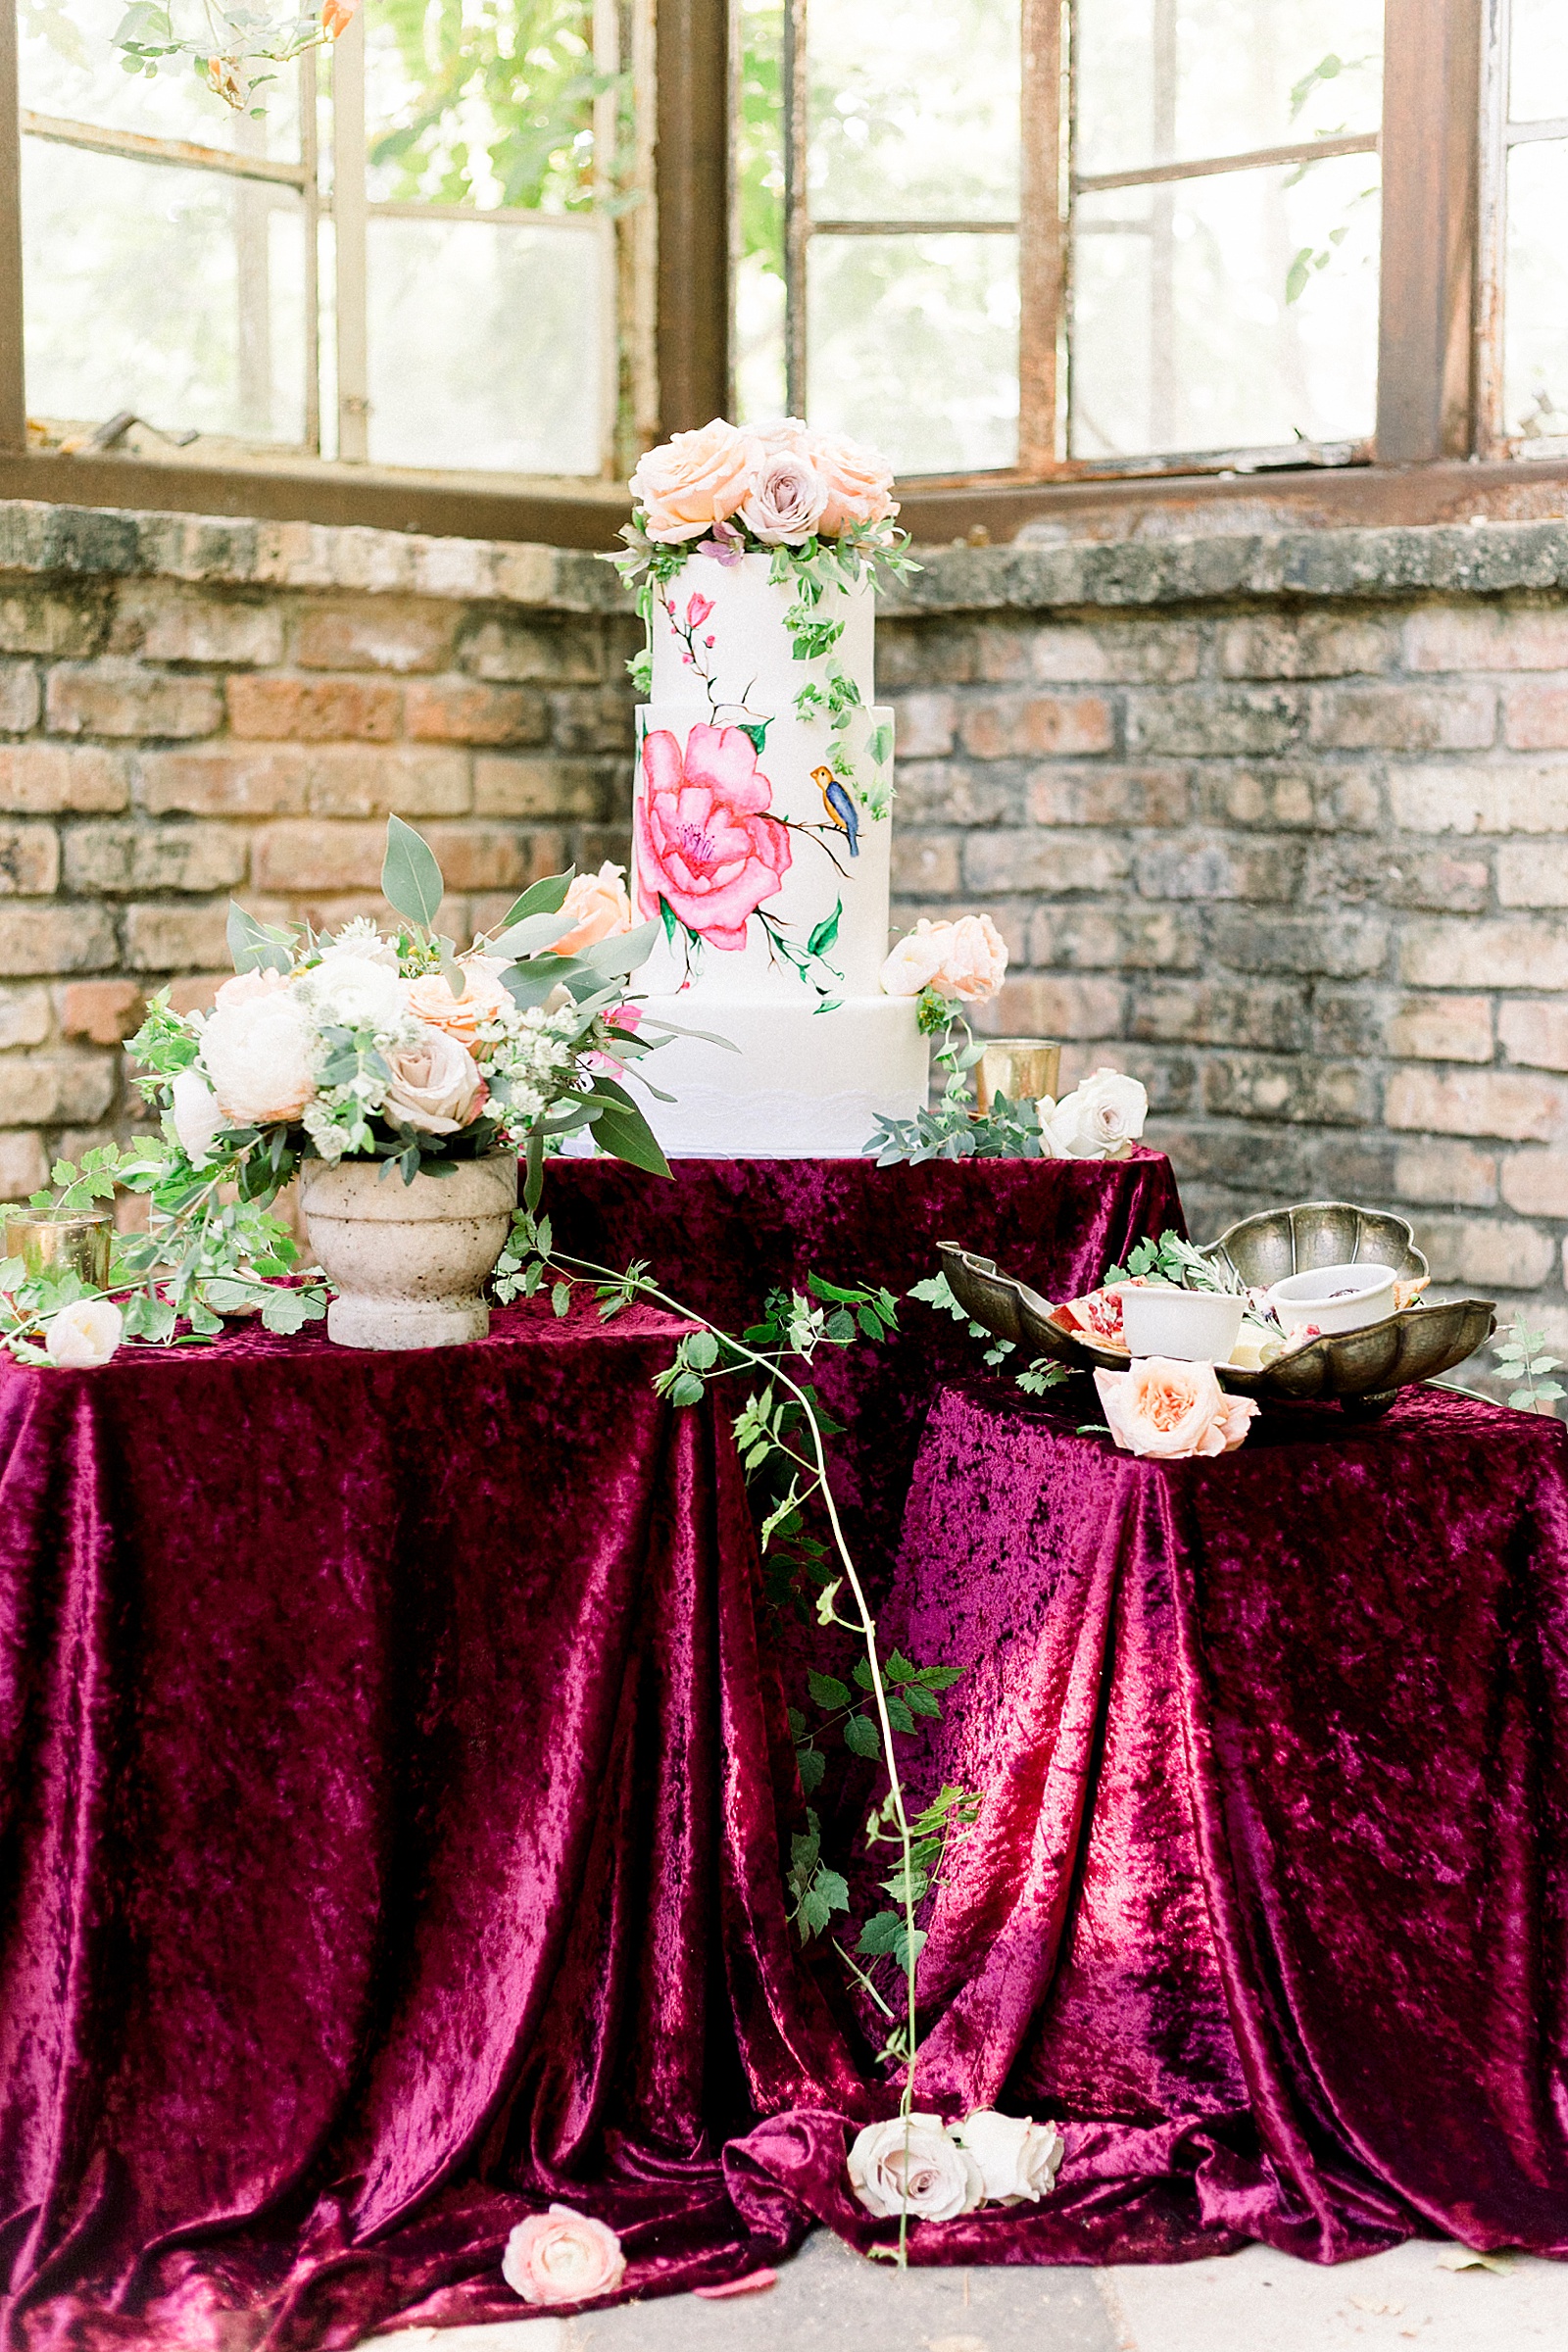 Handpainted Garden Cake, Wedding Cake Inspiration